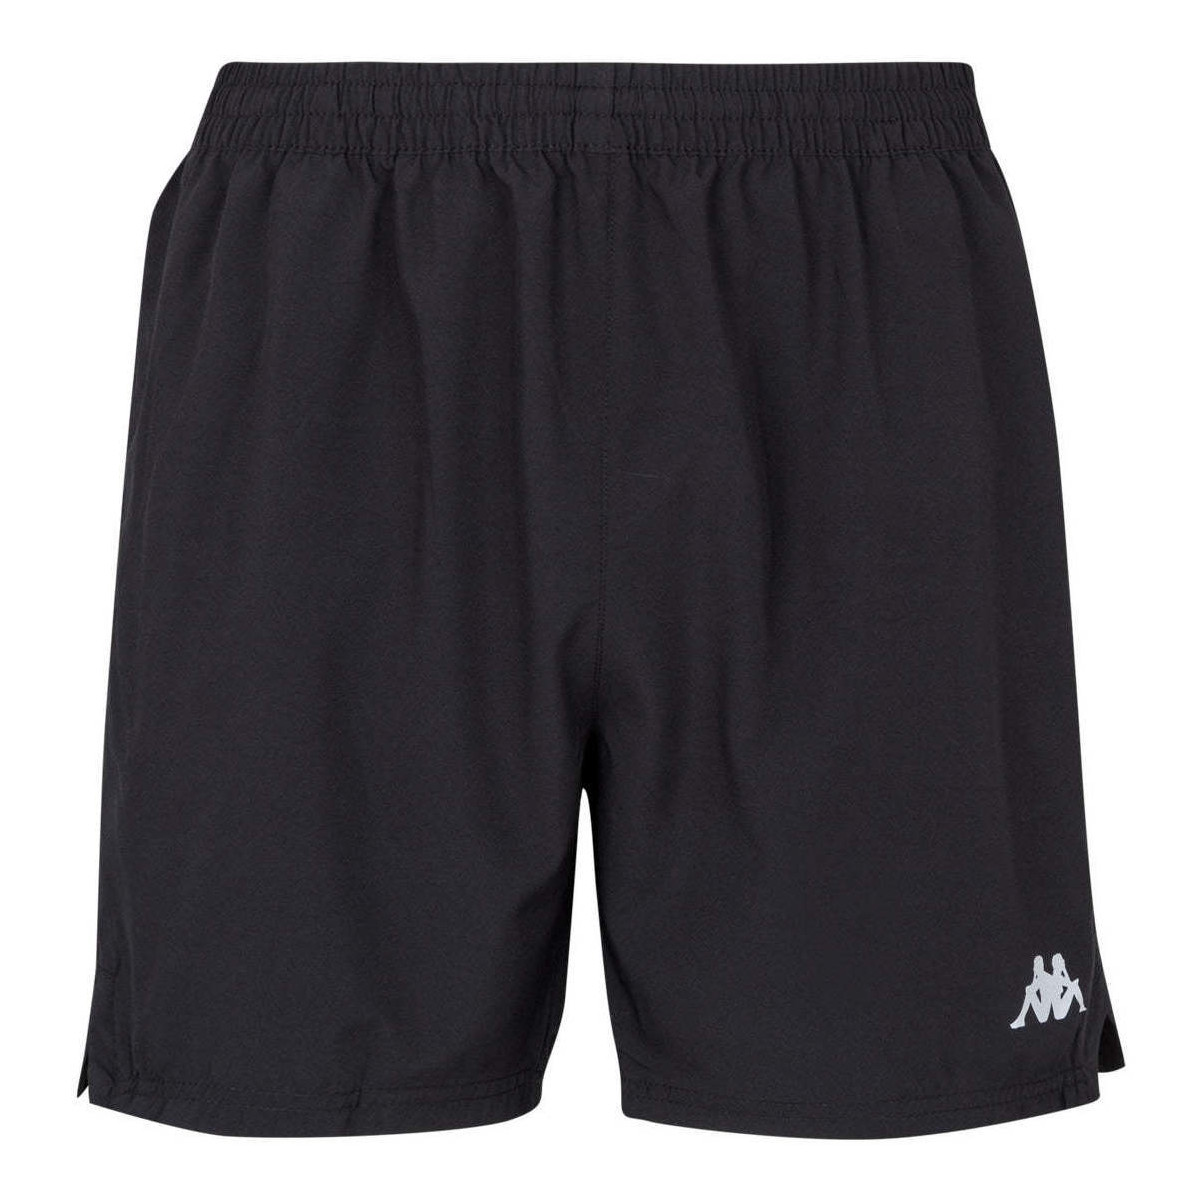 Vêtements Garçon Shorts / Bermudas Kappa Short Tennis Lambre Noir